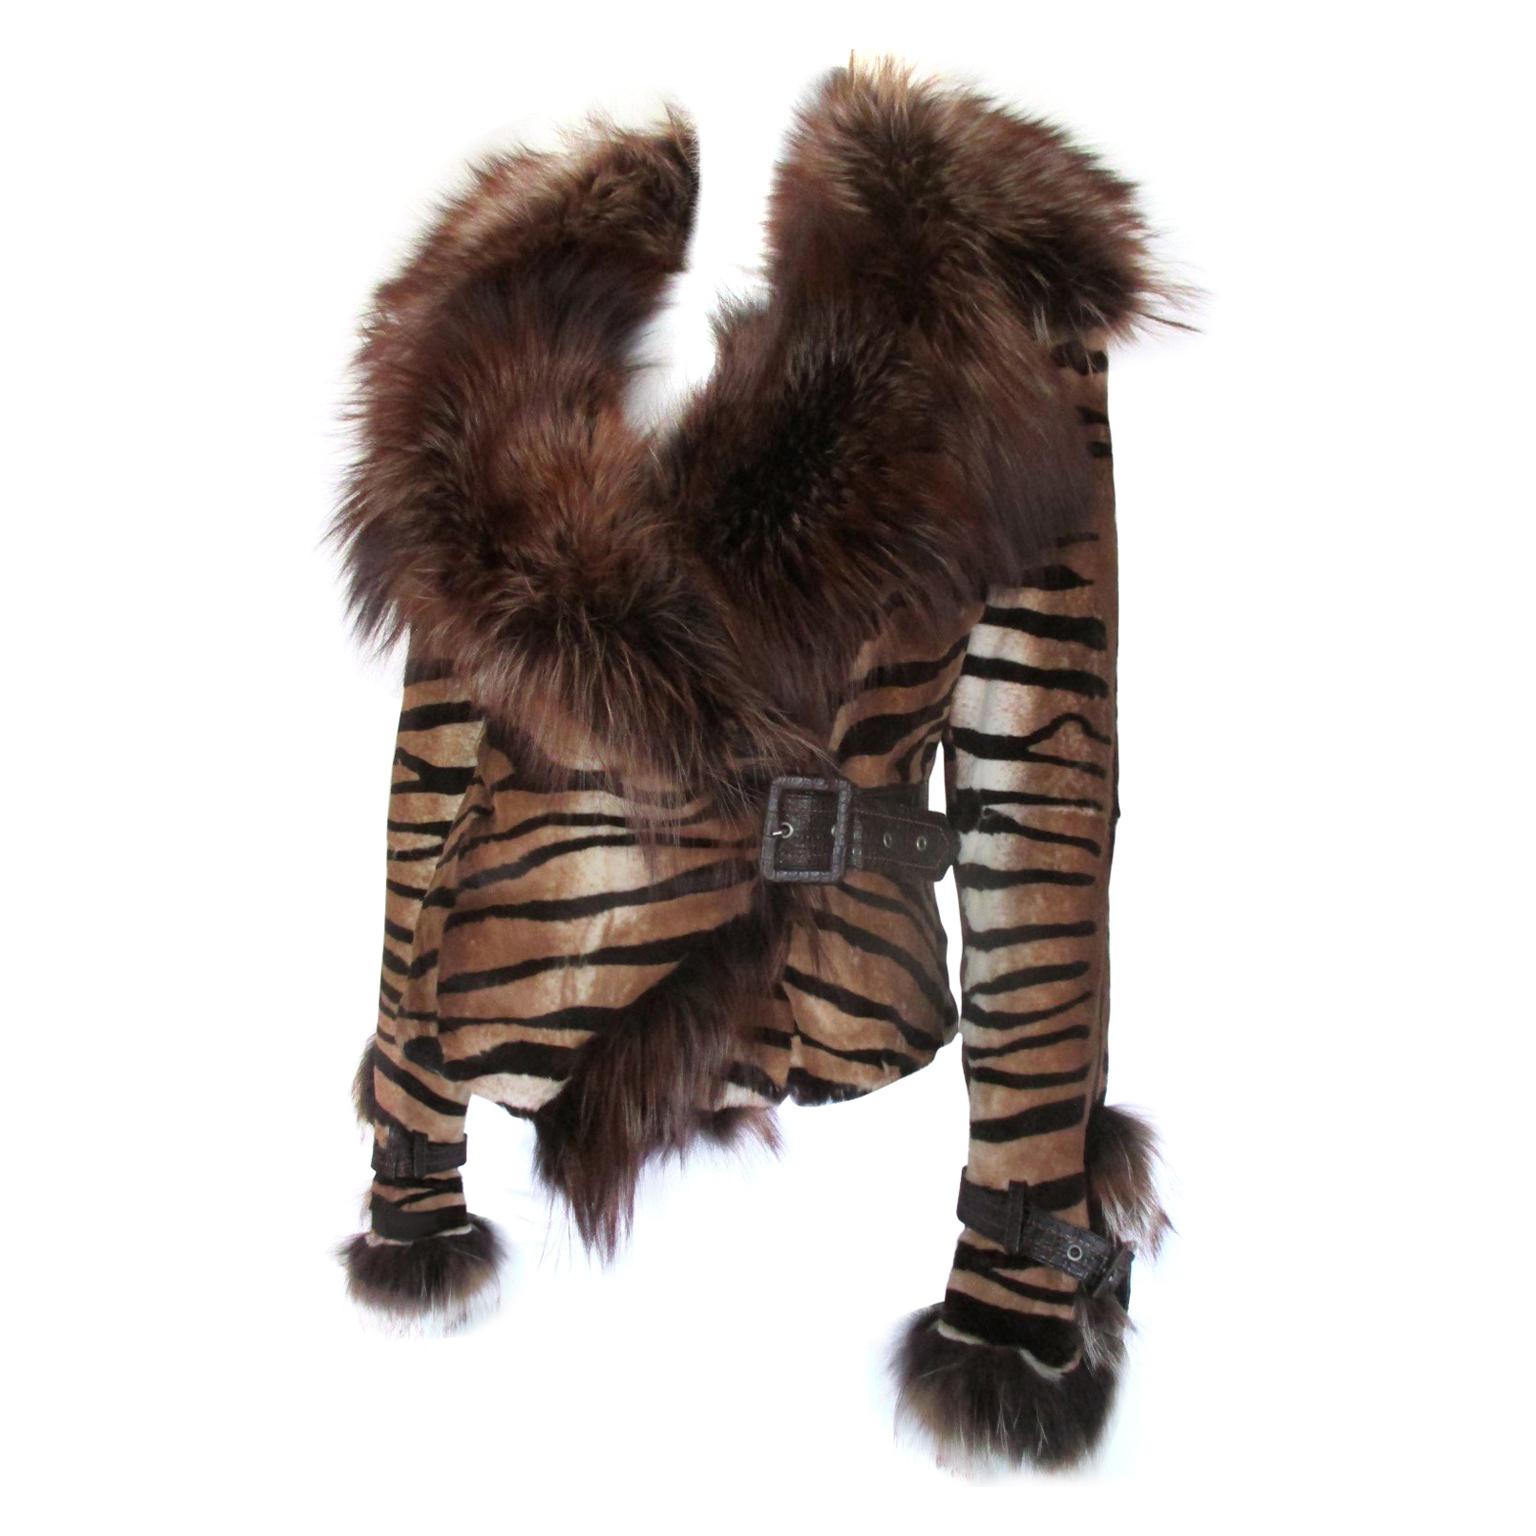 Tiger Printed Fur Jacket with Fox Fur Collar